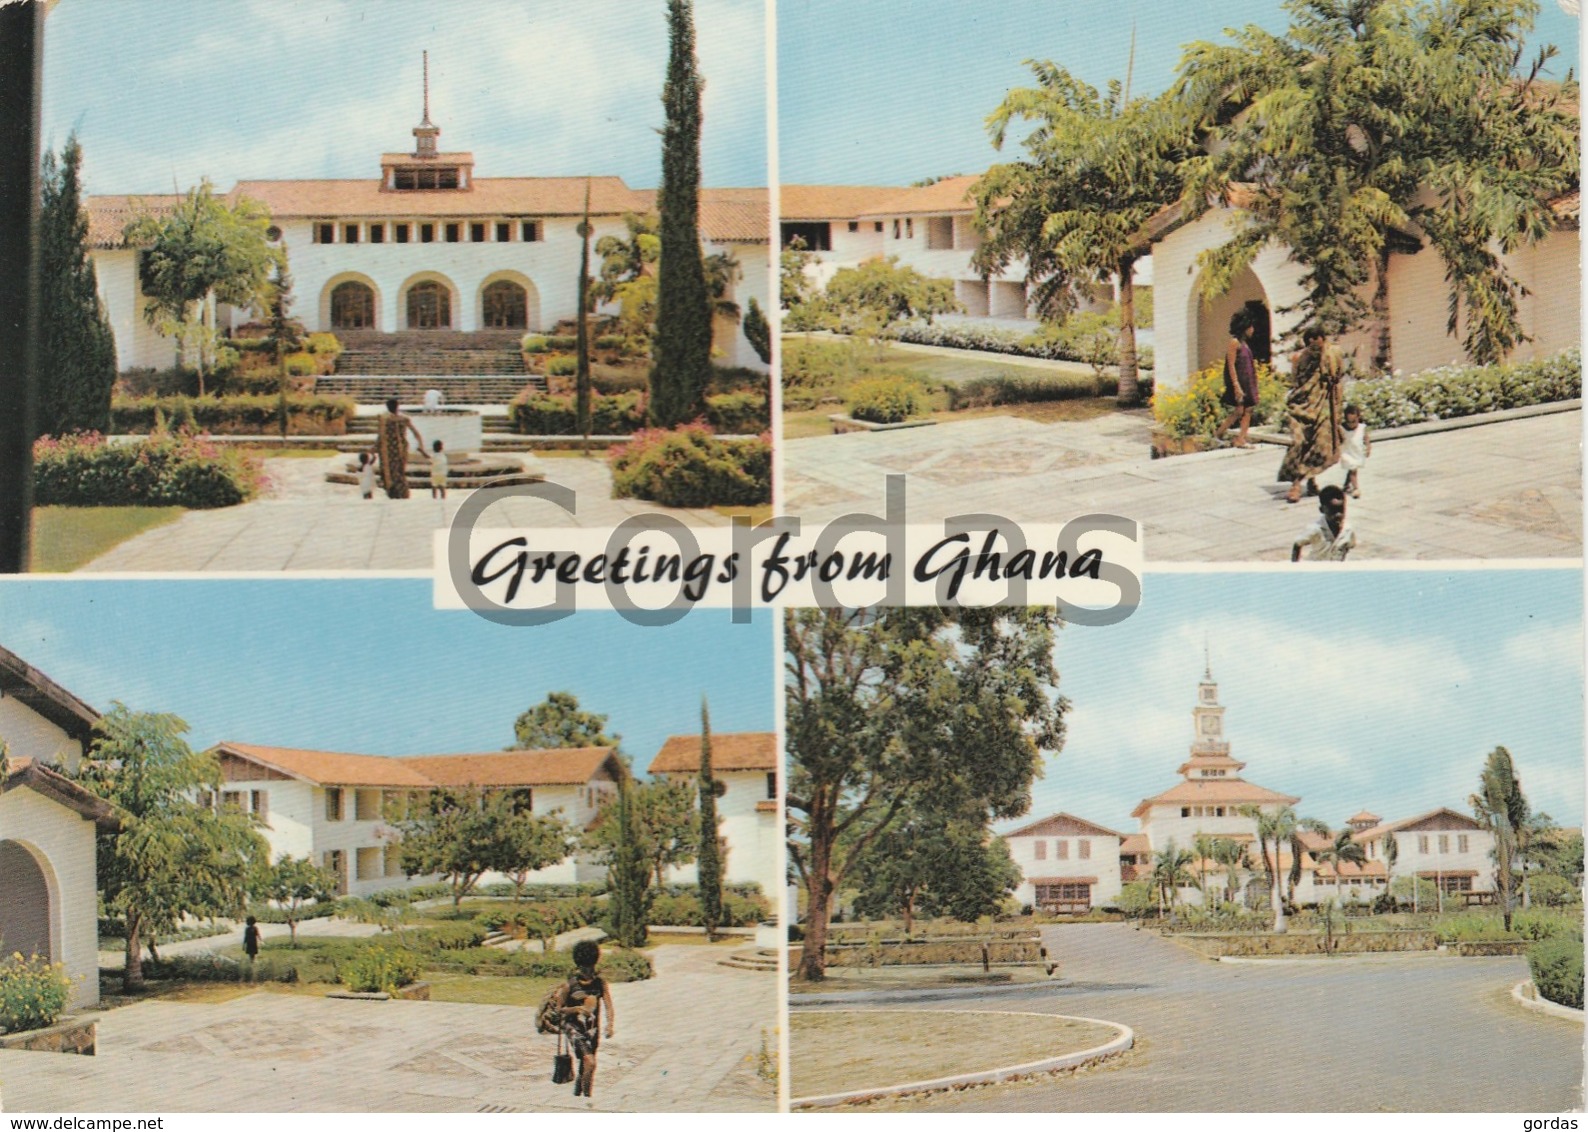 Greetings From Ghana - Accra - L'Universite De Ghana - Legon - Ghana - Gold Coast